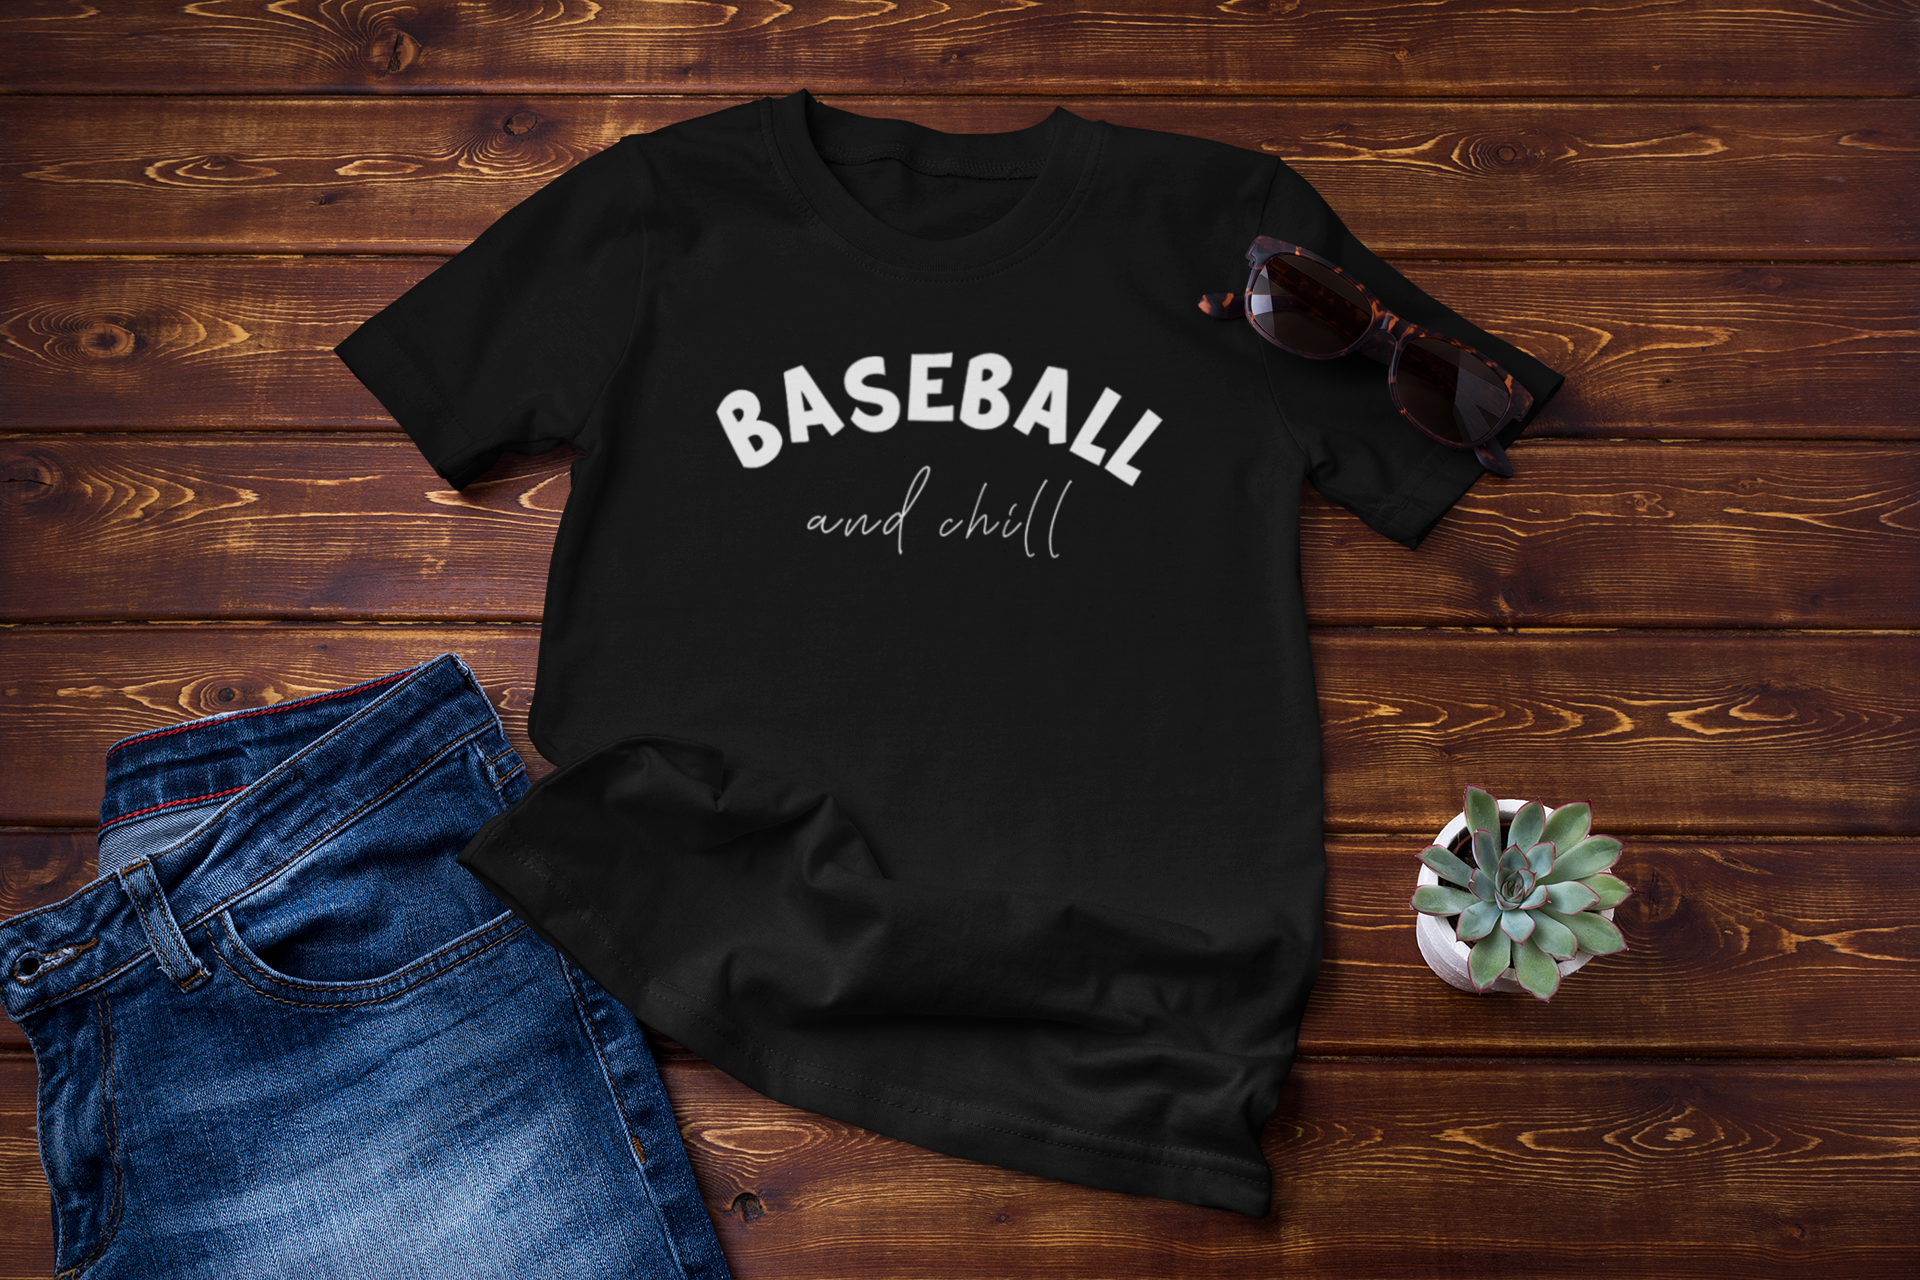 chill baseball shirt